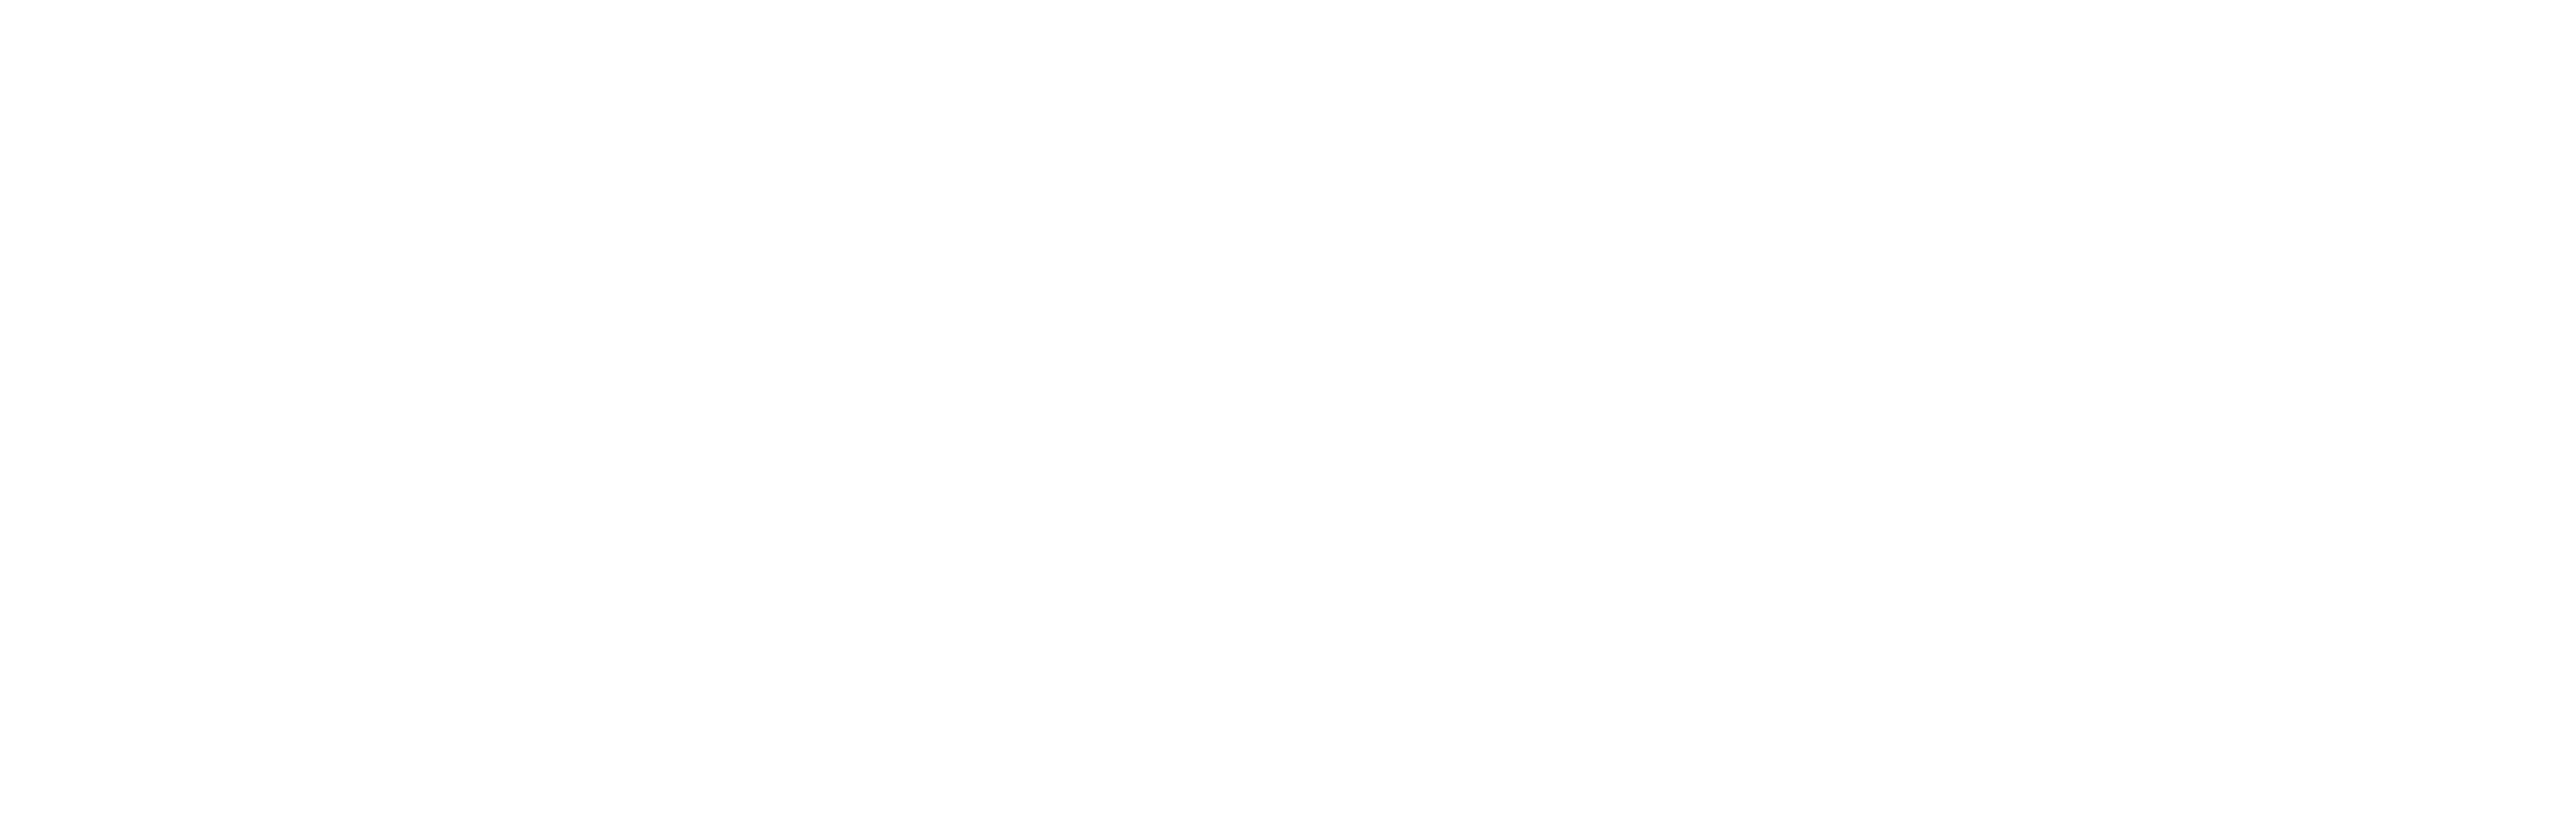 MasterChef Junior logo